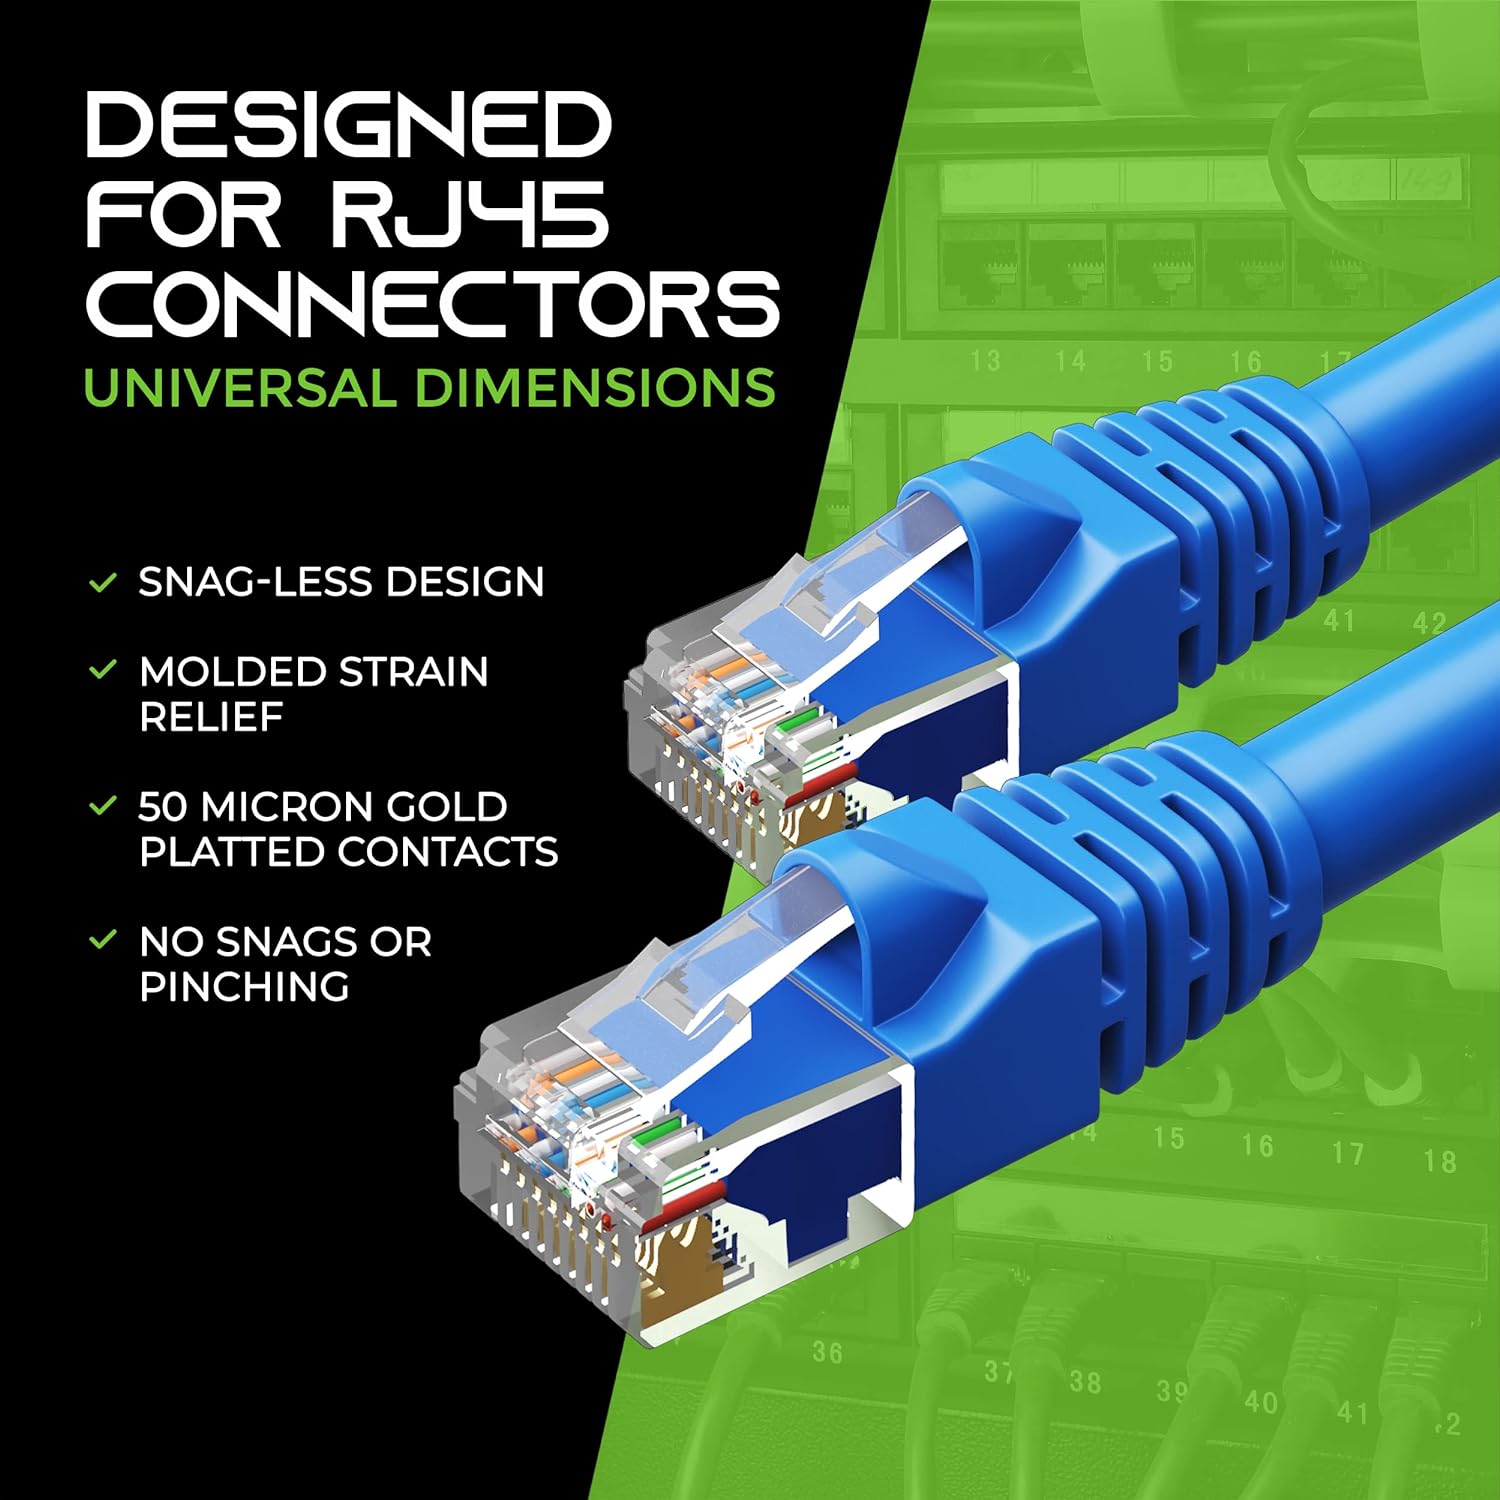 GearIT Cat 6 Ethernet Cable 5 ft (20-Pack) - Cat6 Patch Cable, Cat 6 Patch Cable, Cat6 Cable, Cat 6 Cable, Cat6 Ethernet…